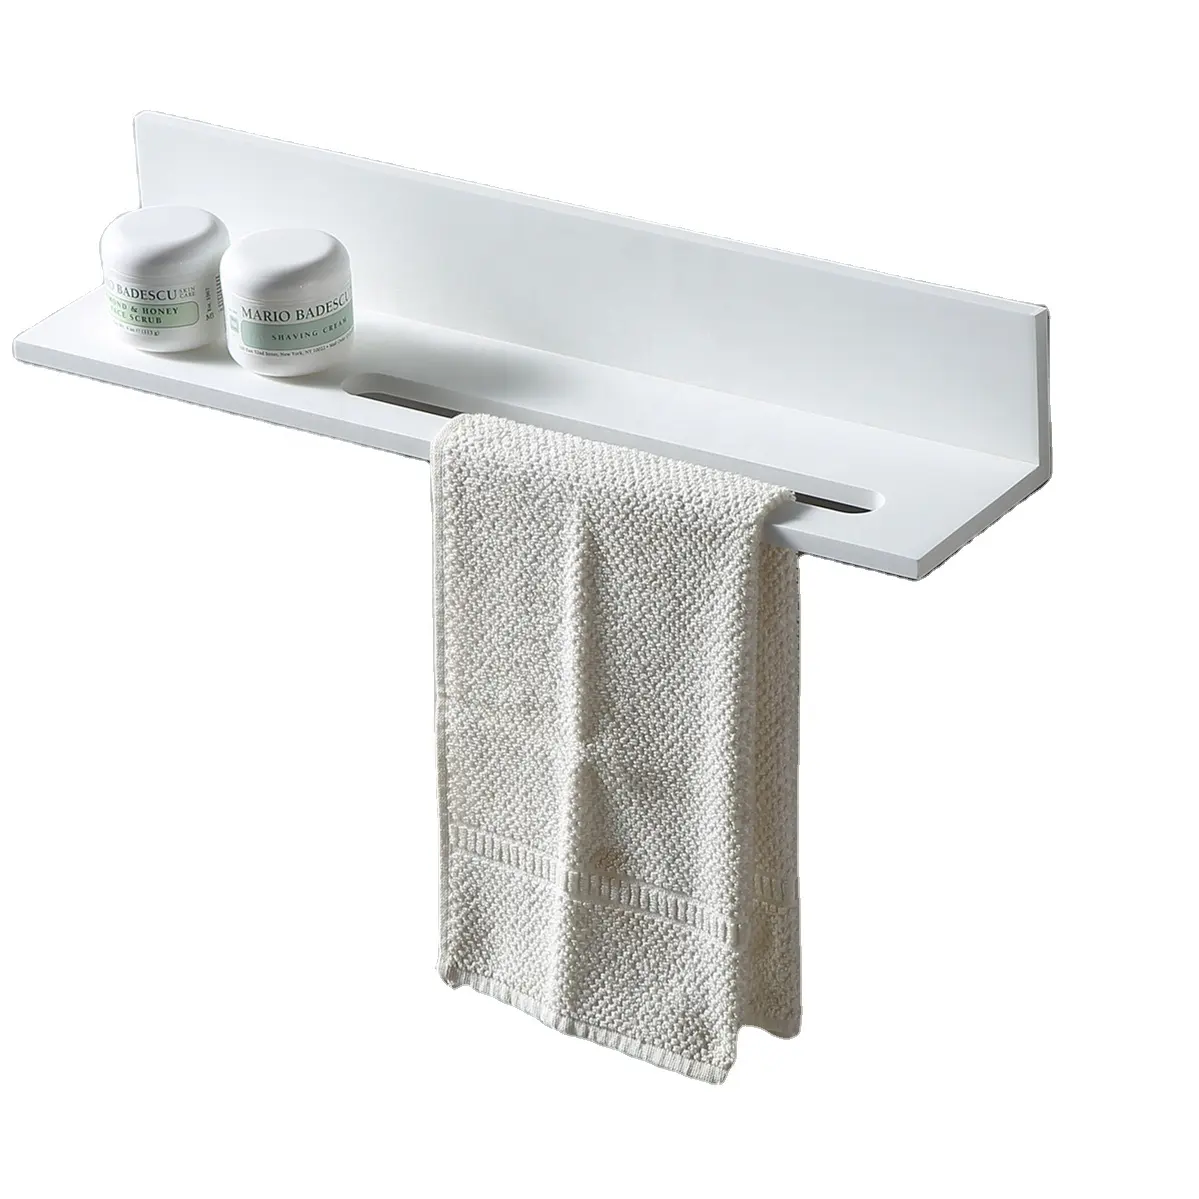 New design bathroom accessories fashionable towel hanger bathroom towel shelf